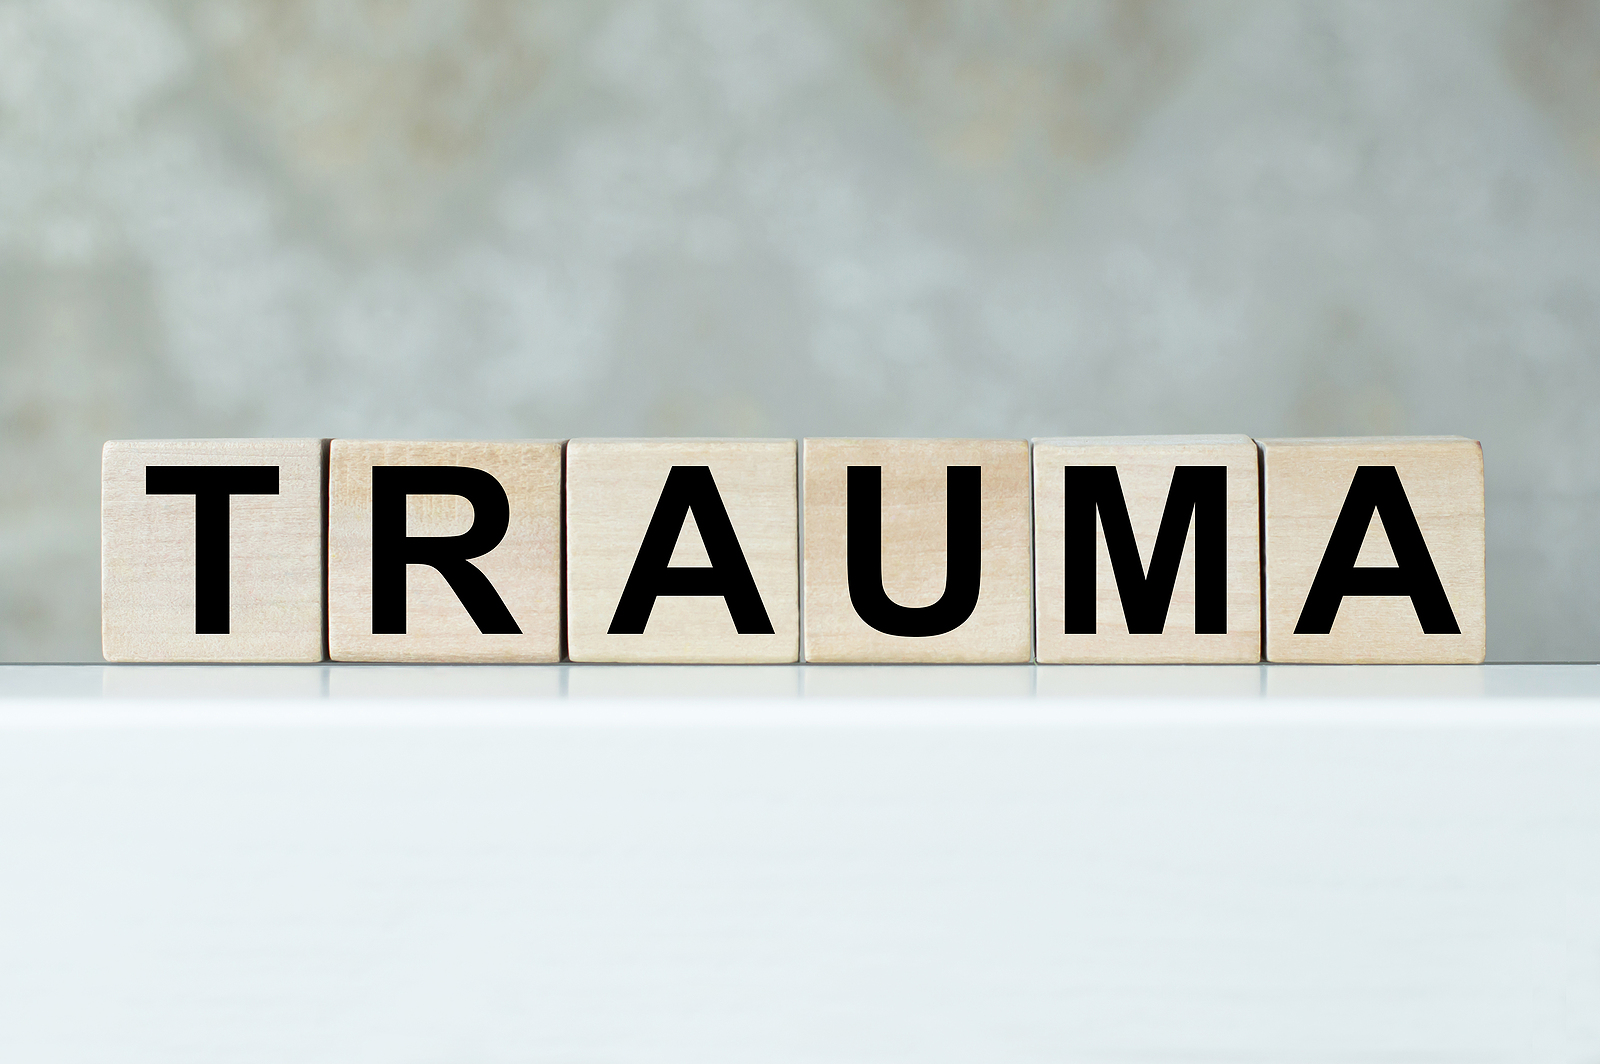 Am I Ready For Trauma Therapy?